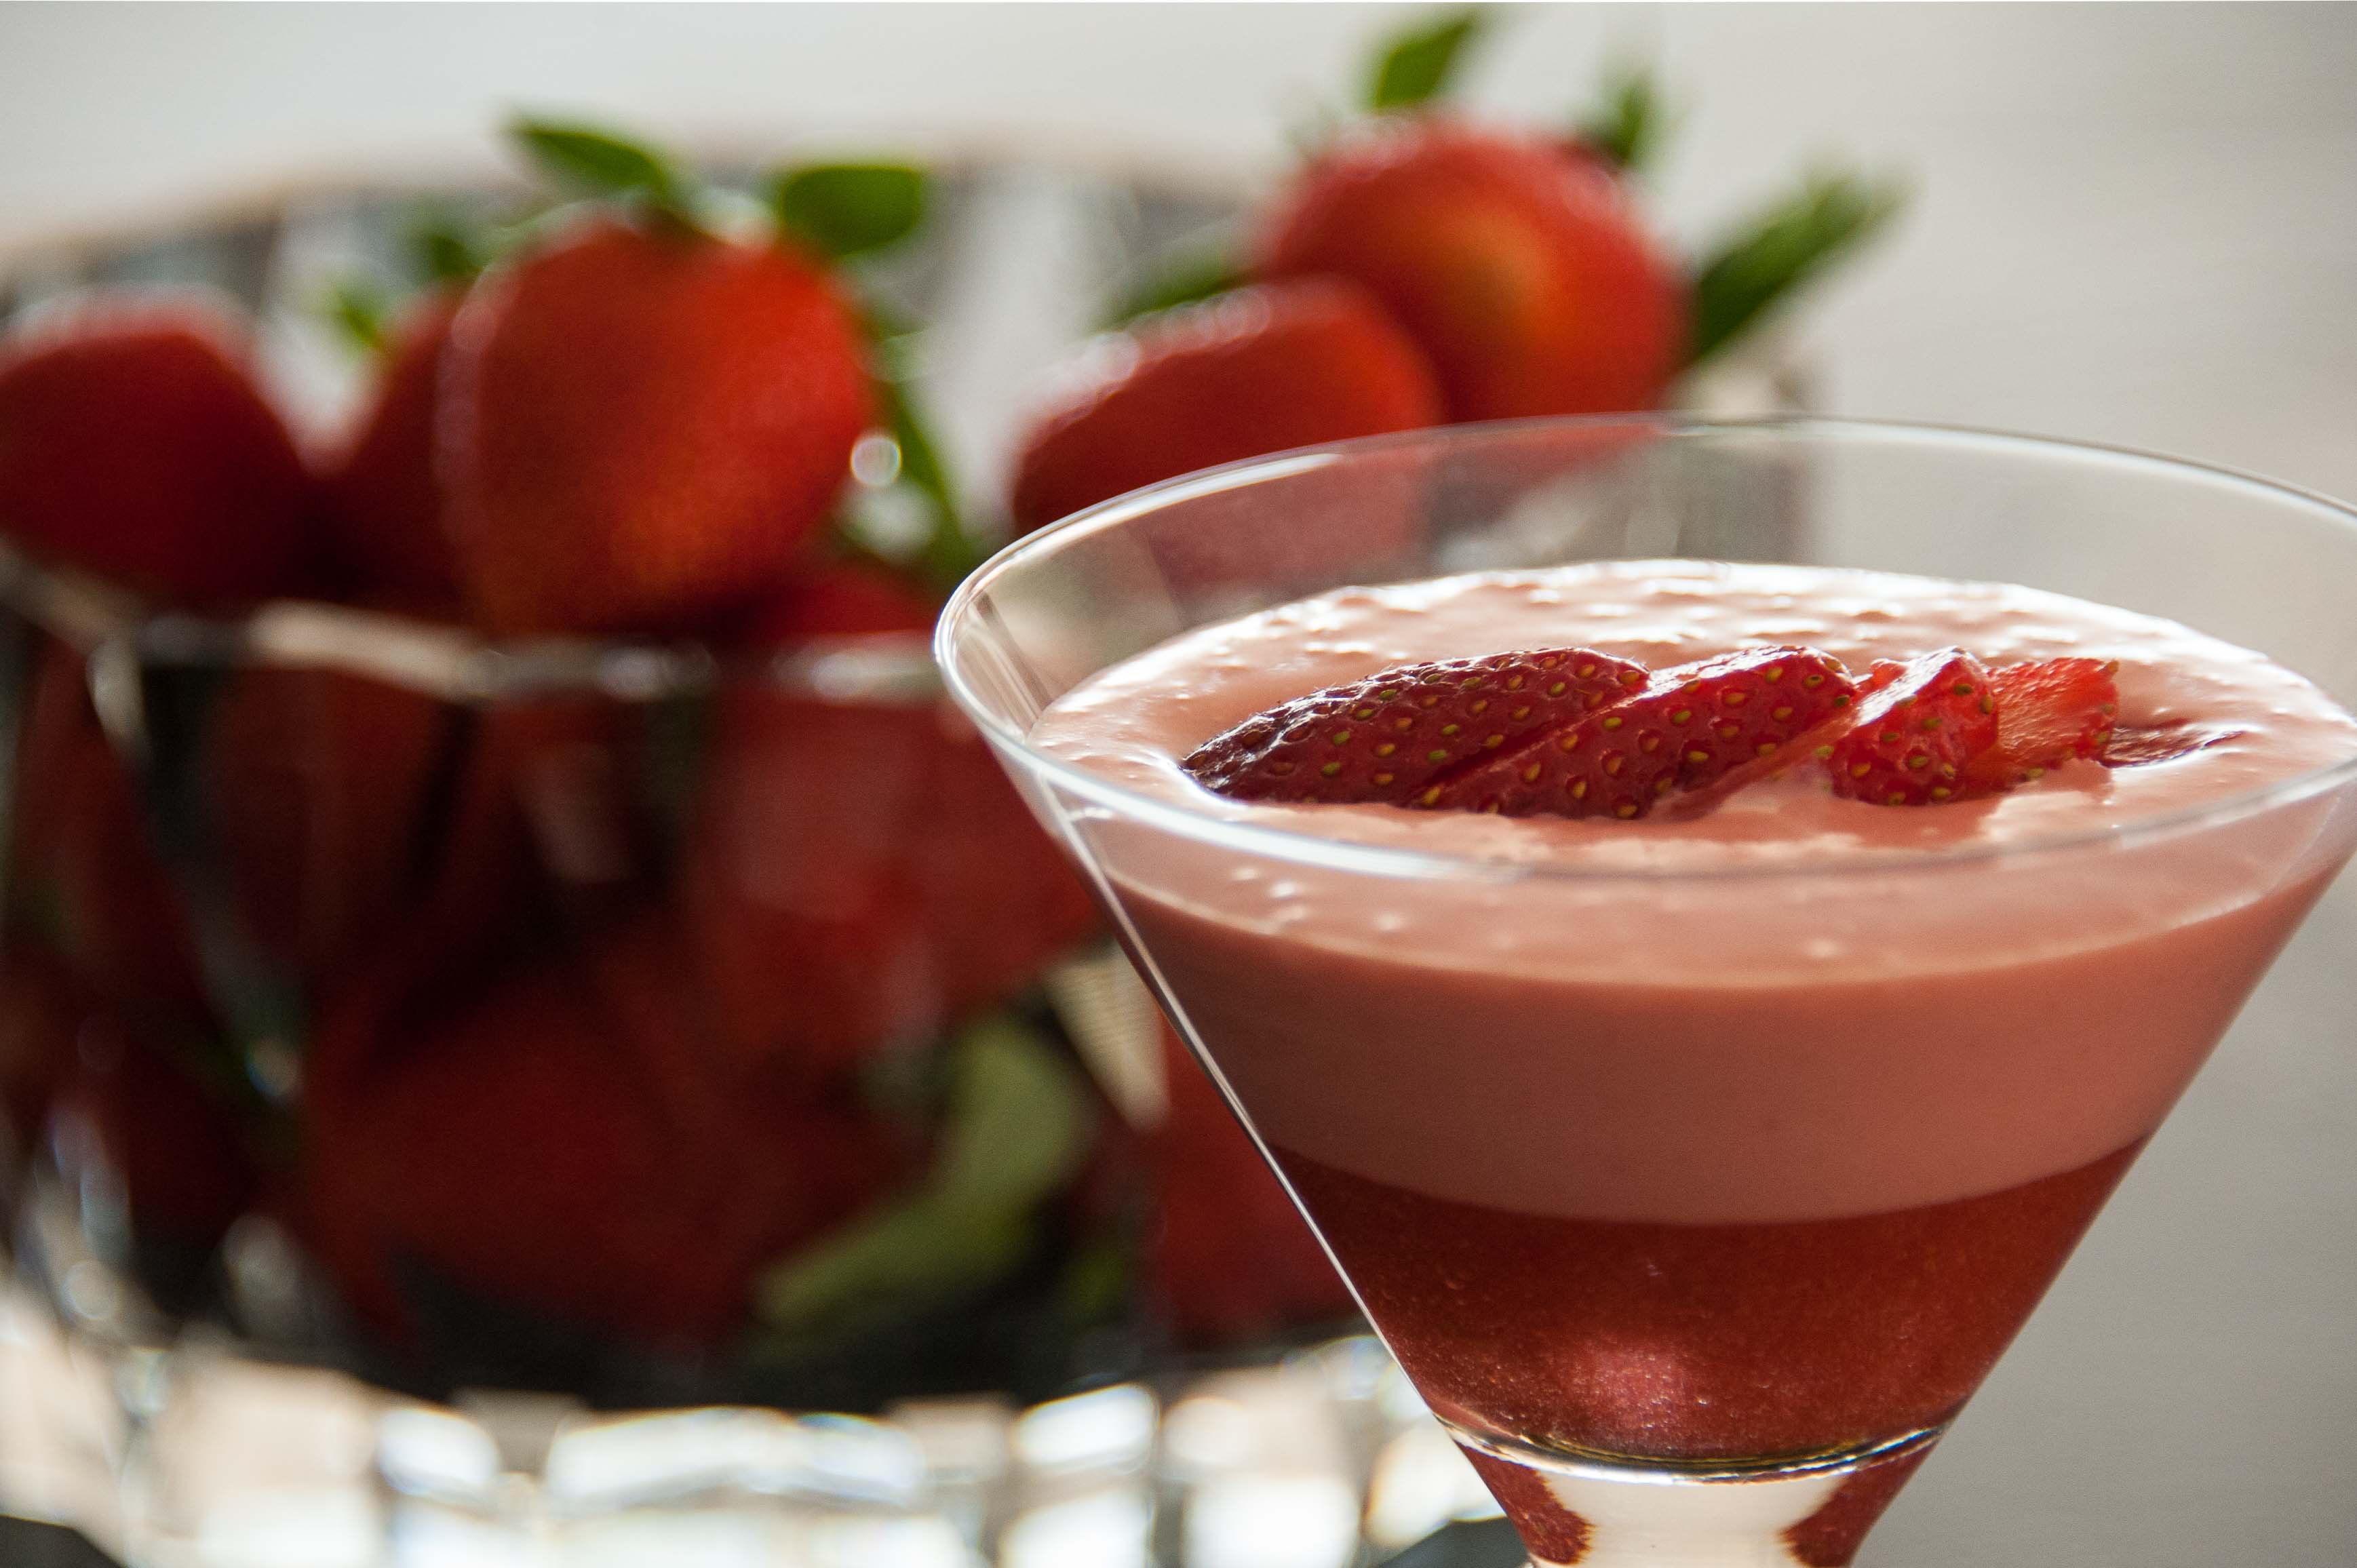 Cool Creamy Strawberry Dessert